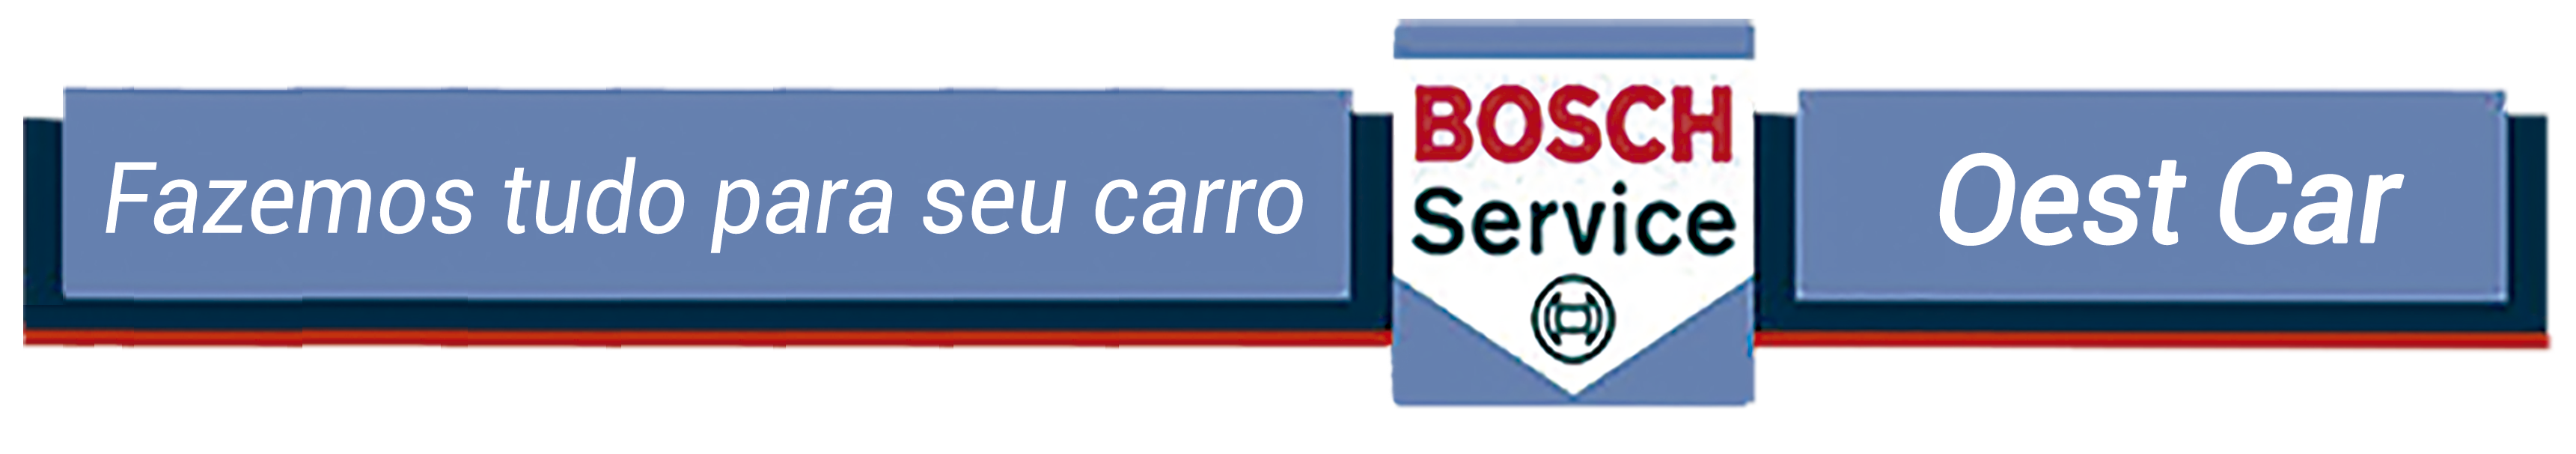 Oest Car Bosch Service: Oficina Mecanica